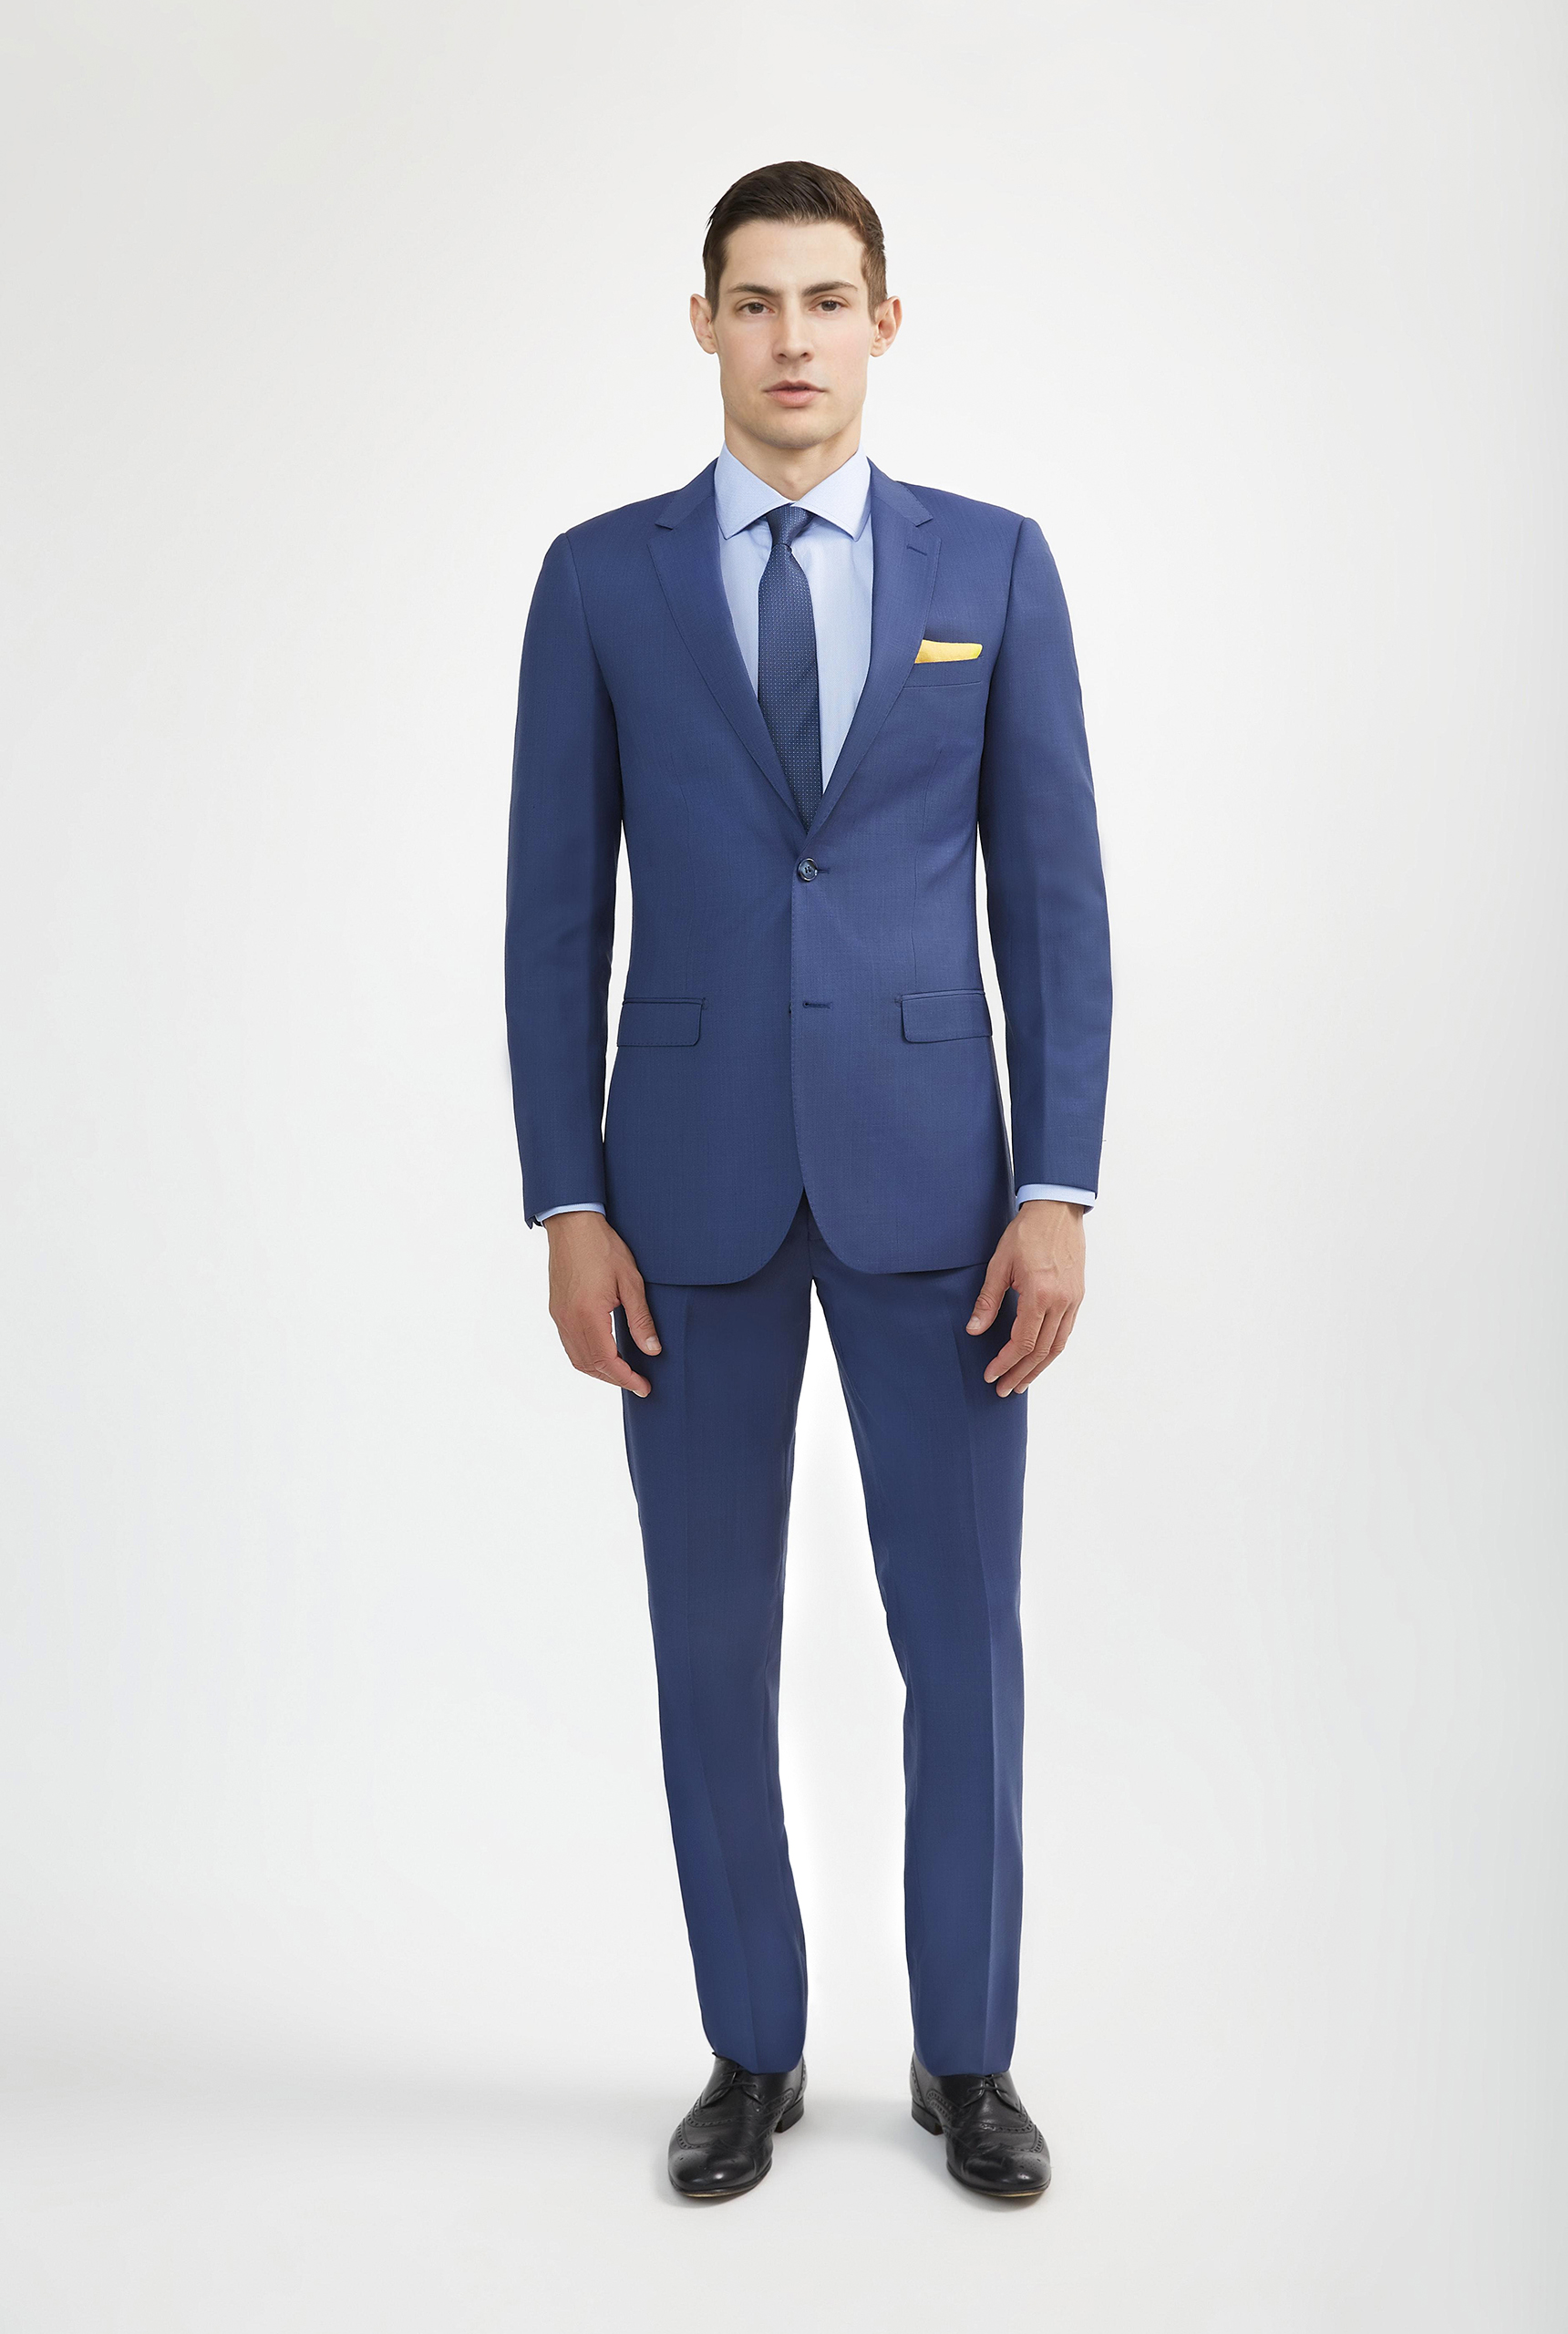 Adoro Deluxe: 100% Italian Wool Notch Lapel Royal Blue Suit